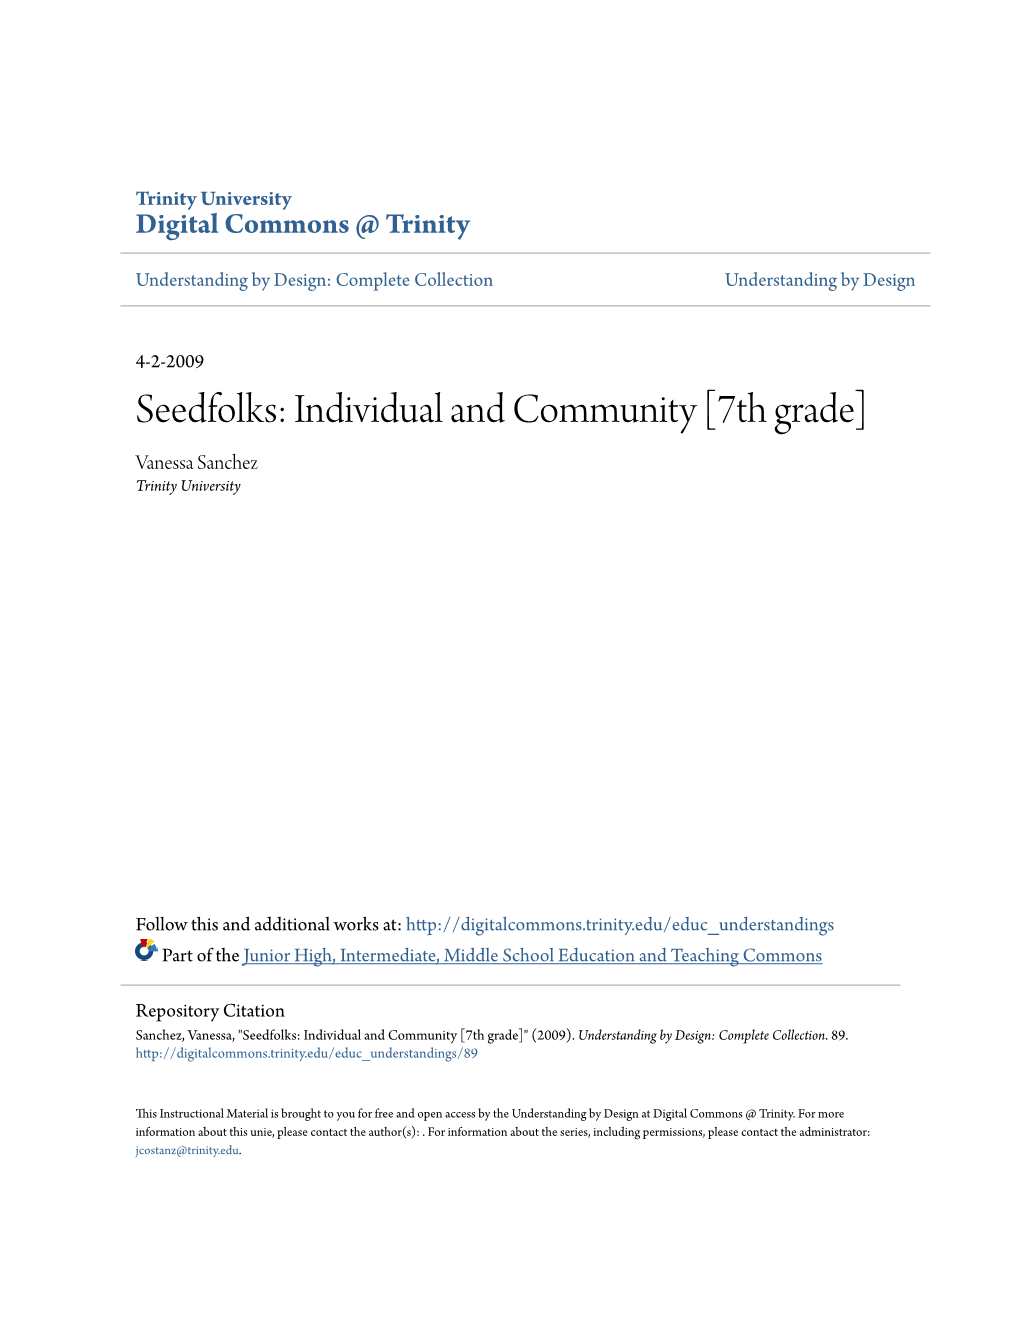 Seedfolks: Individual and Community [7Th Grade] Vanessa Sanchez Trinity University